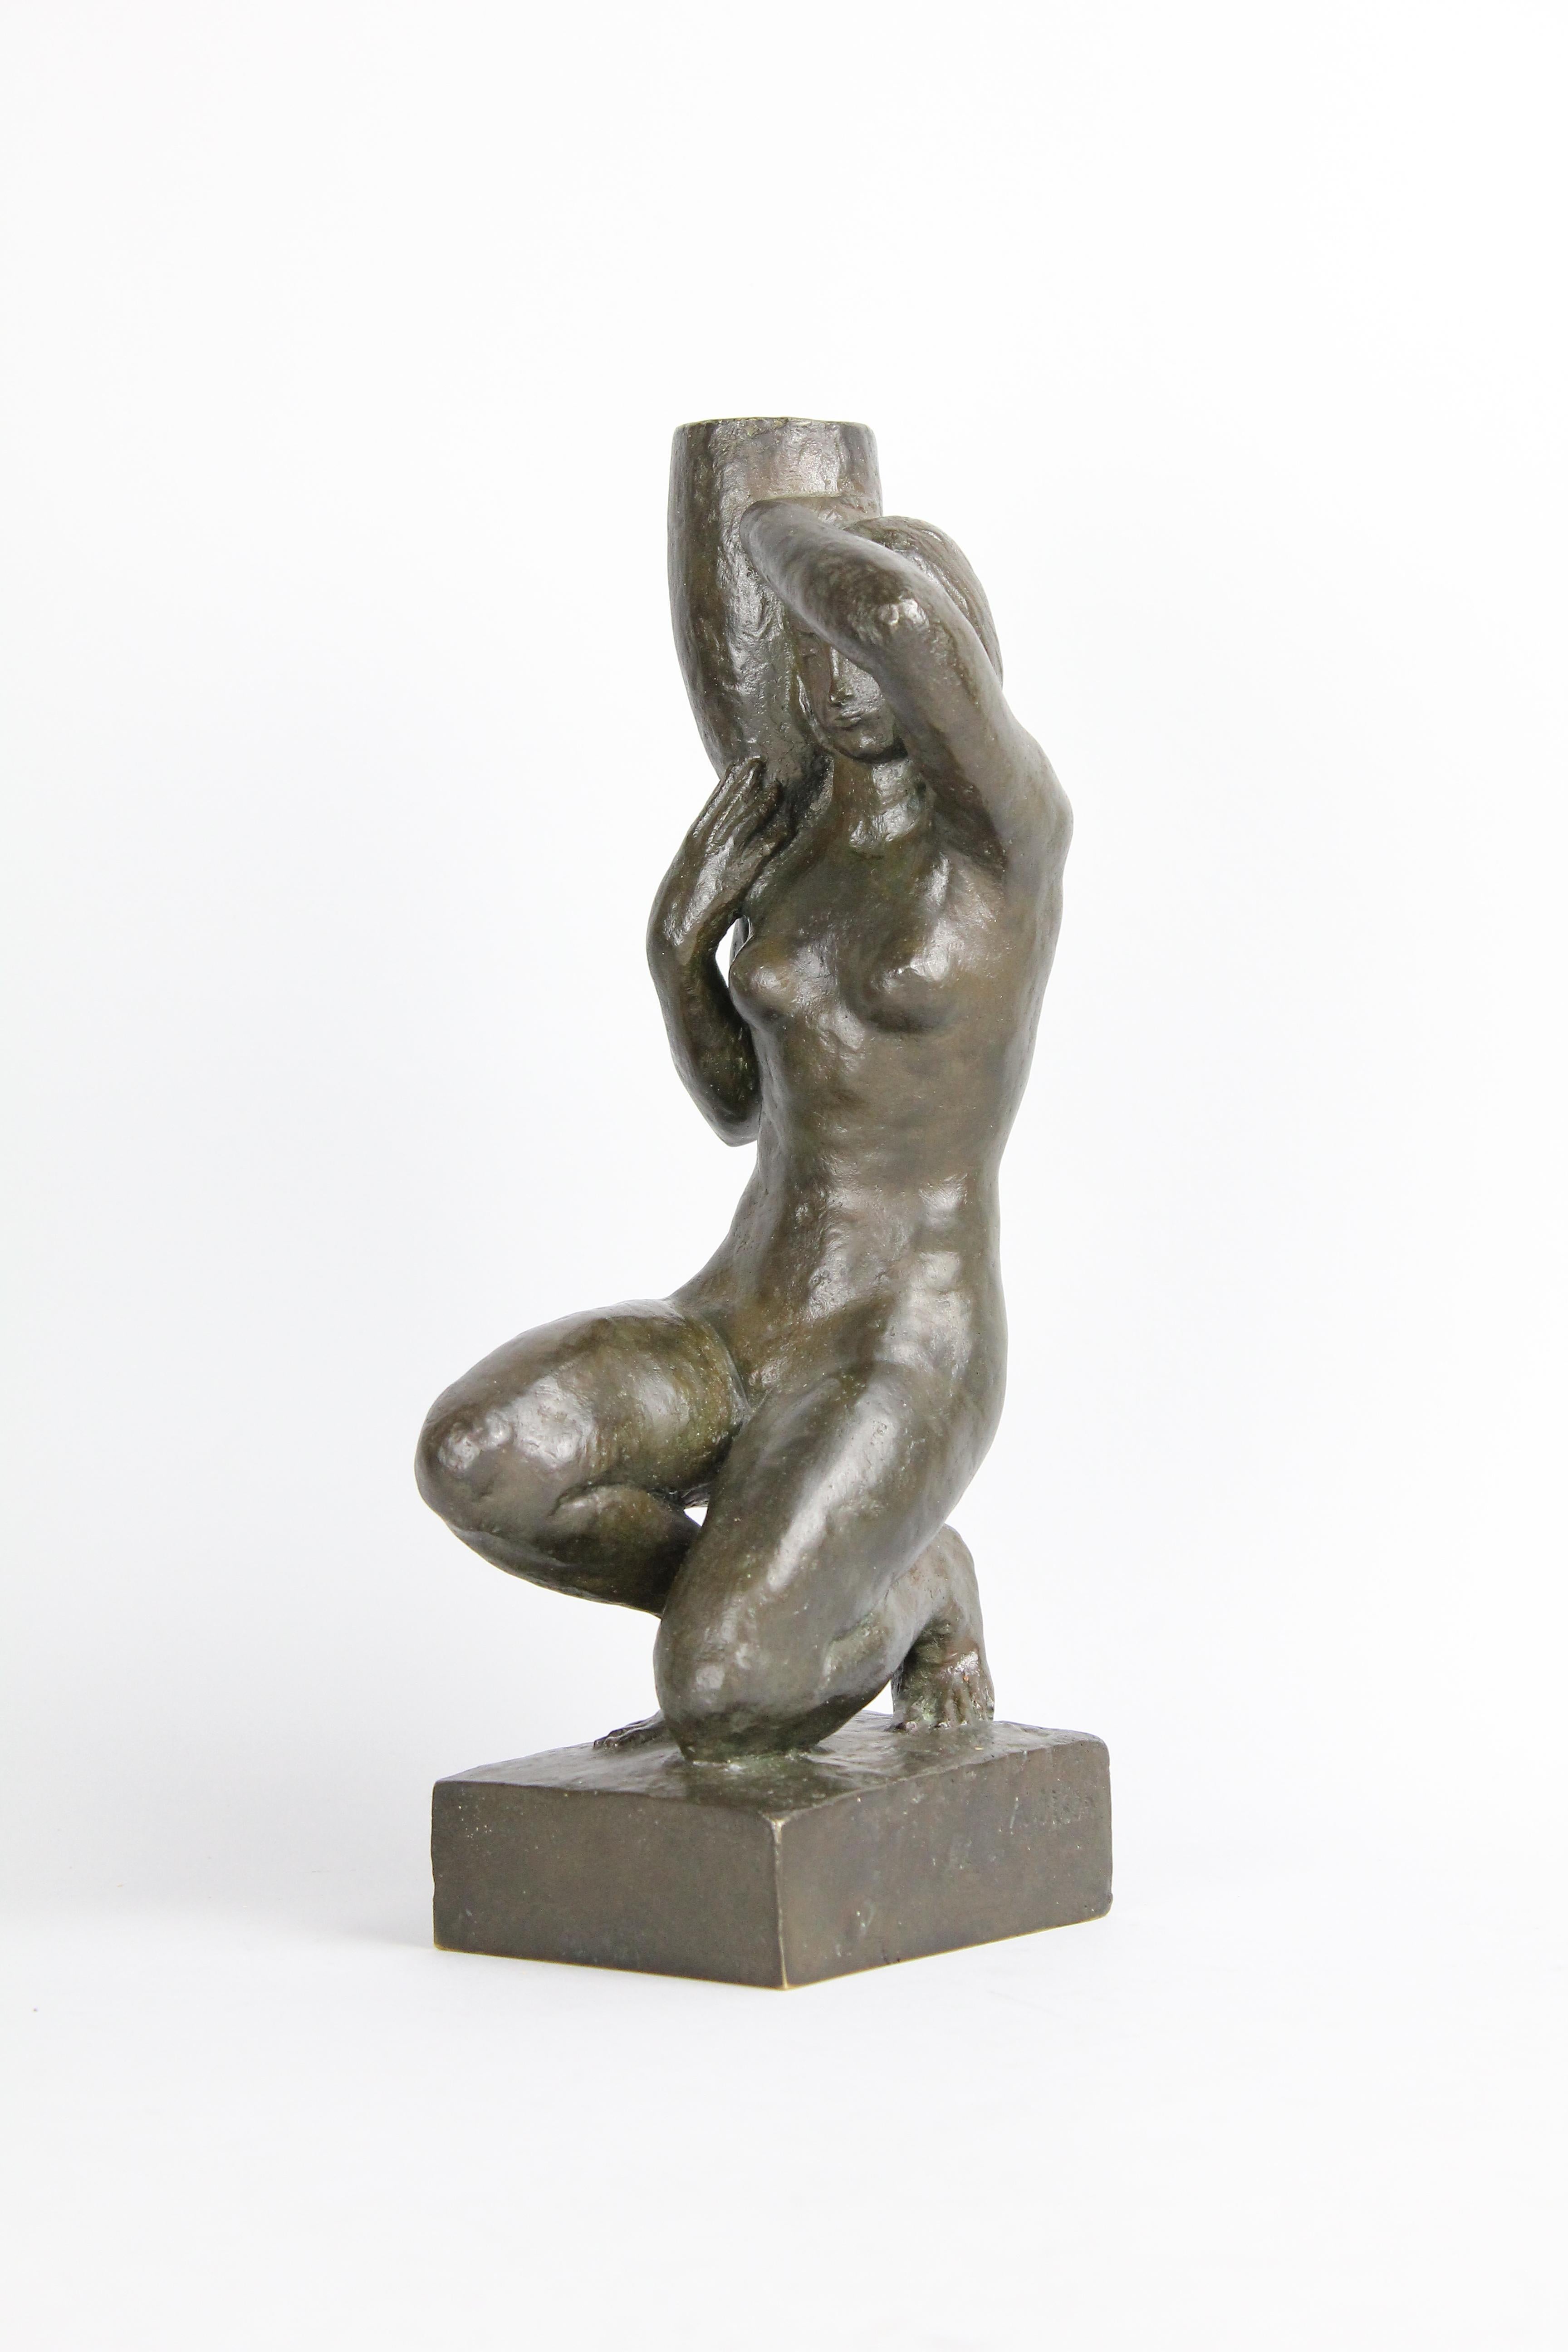 Very nice bronze sculpture depicting a nude girl kneeling.
It is signed 